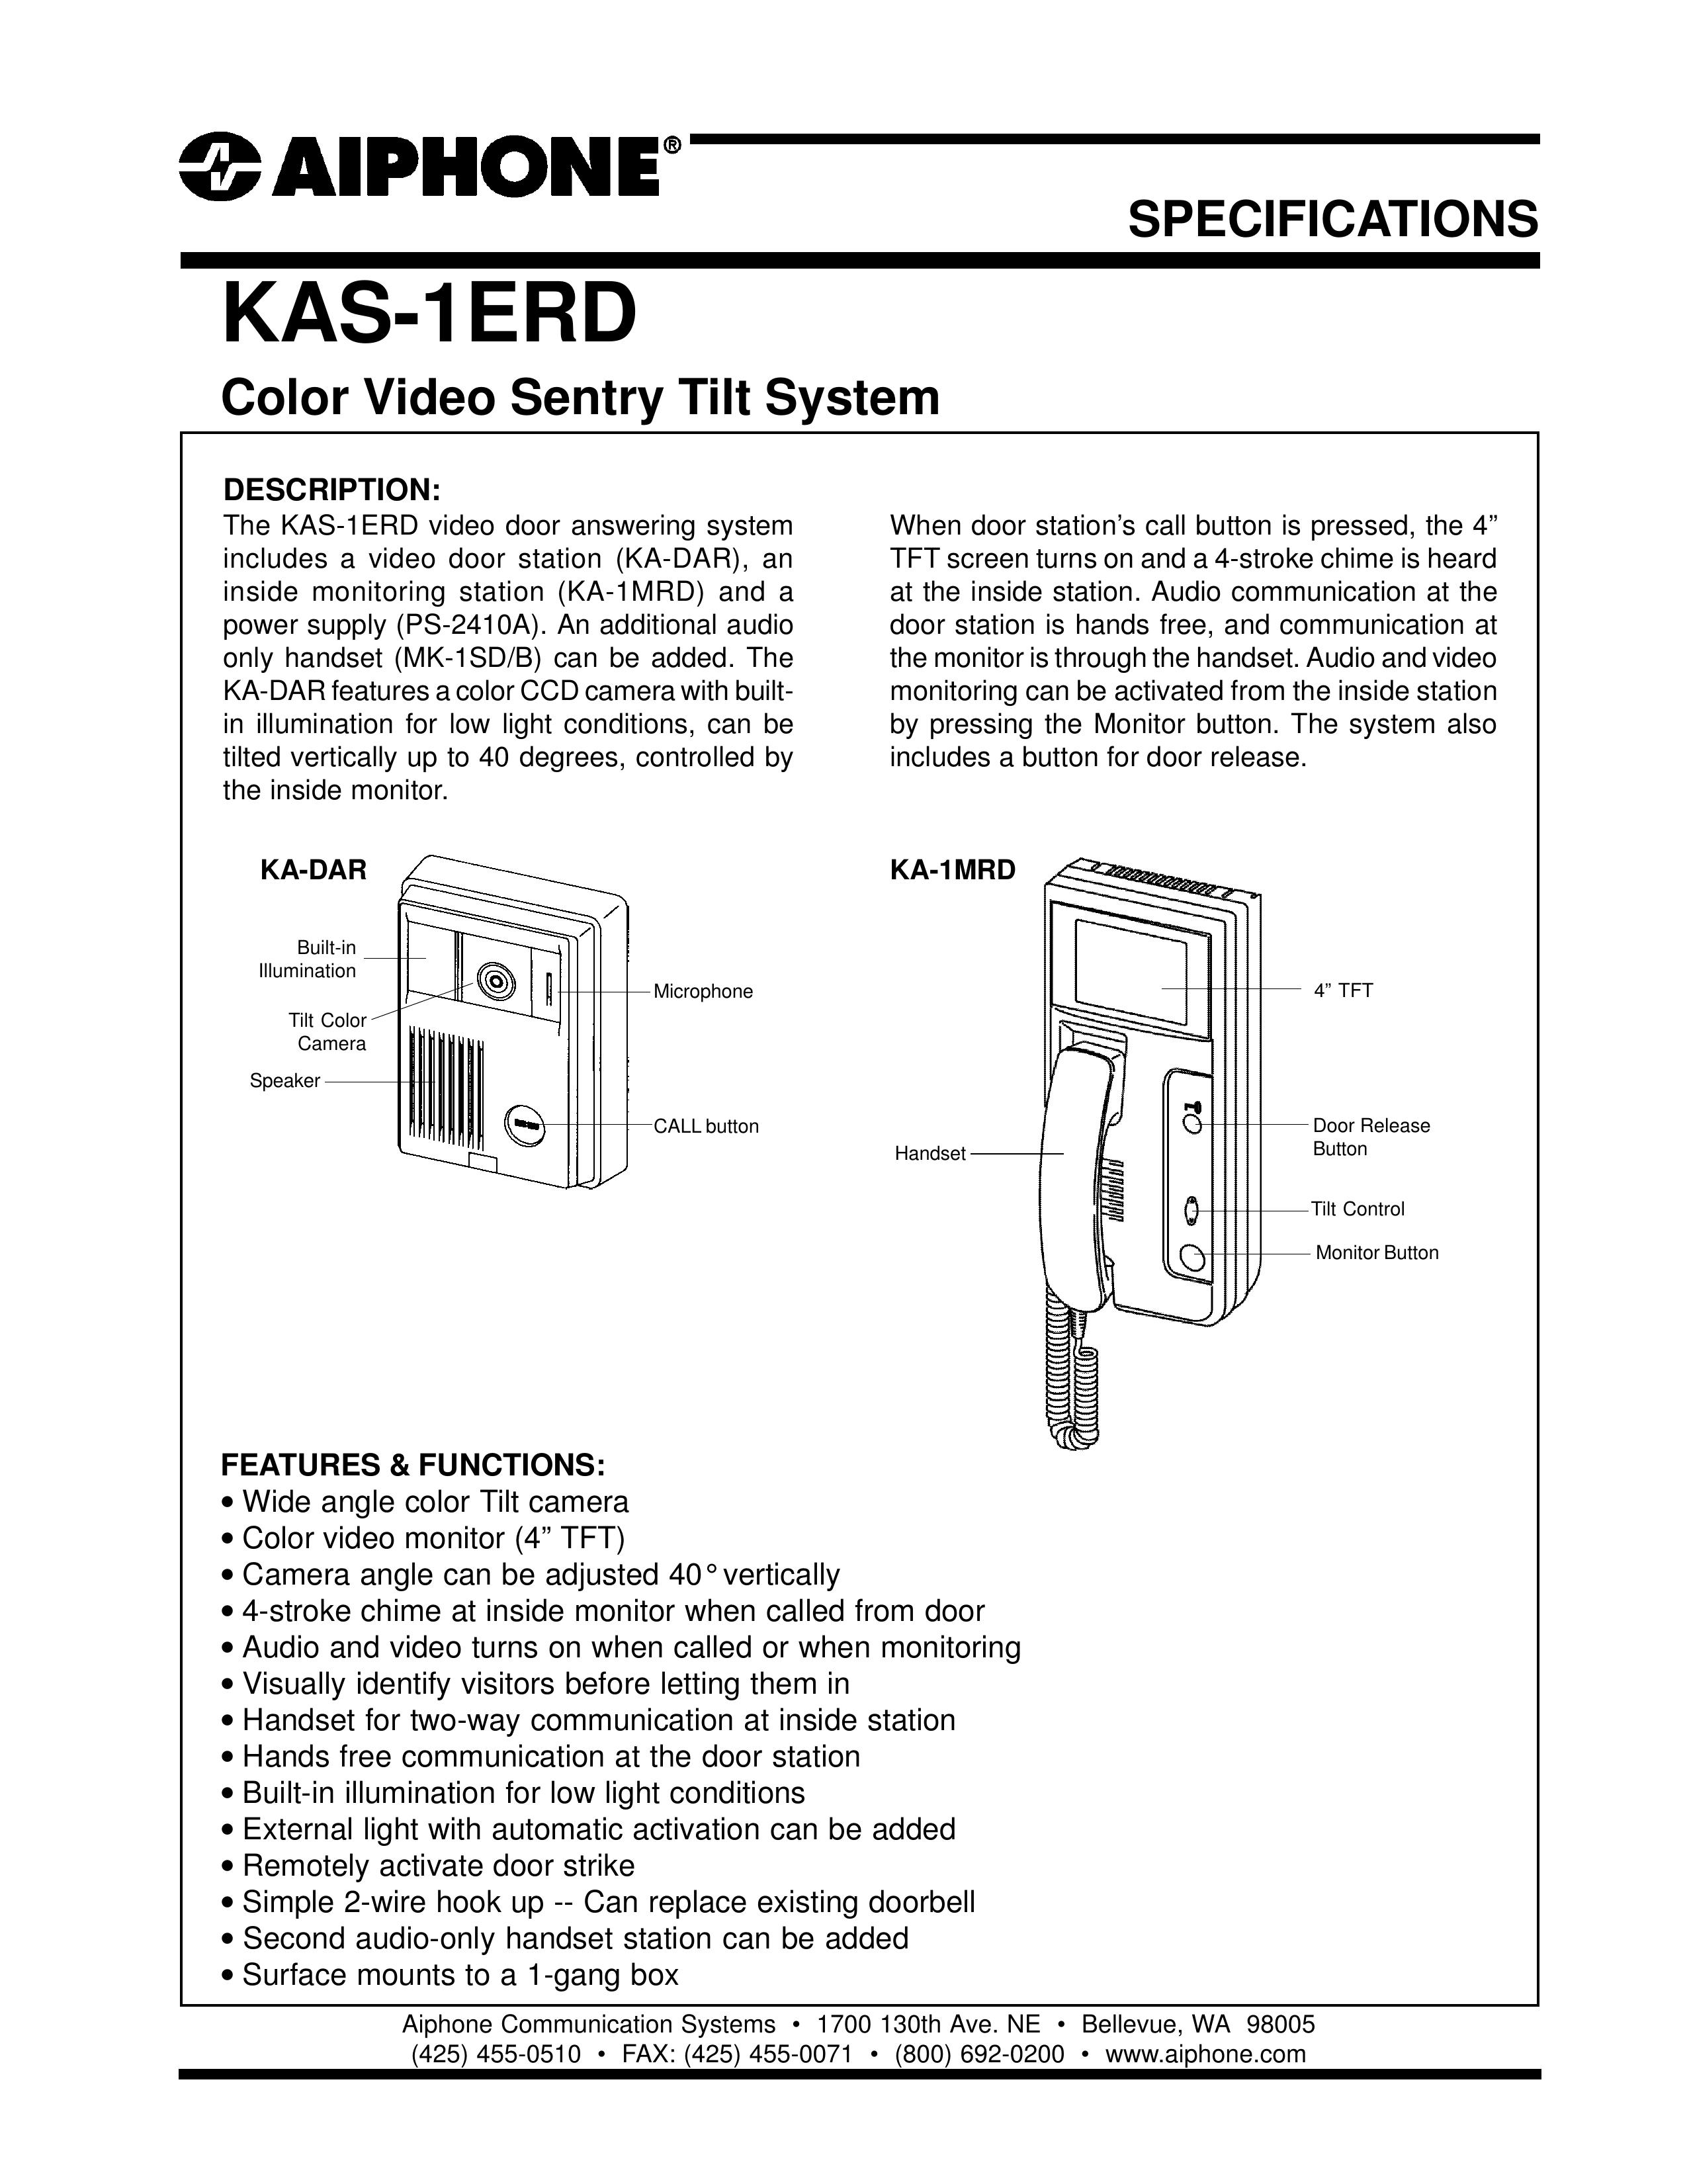 Aiphone KAS-1ERD Security Camera User Manual